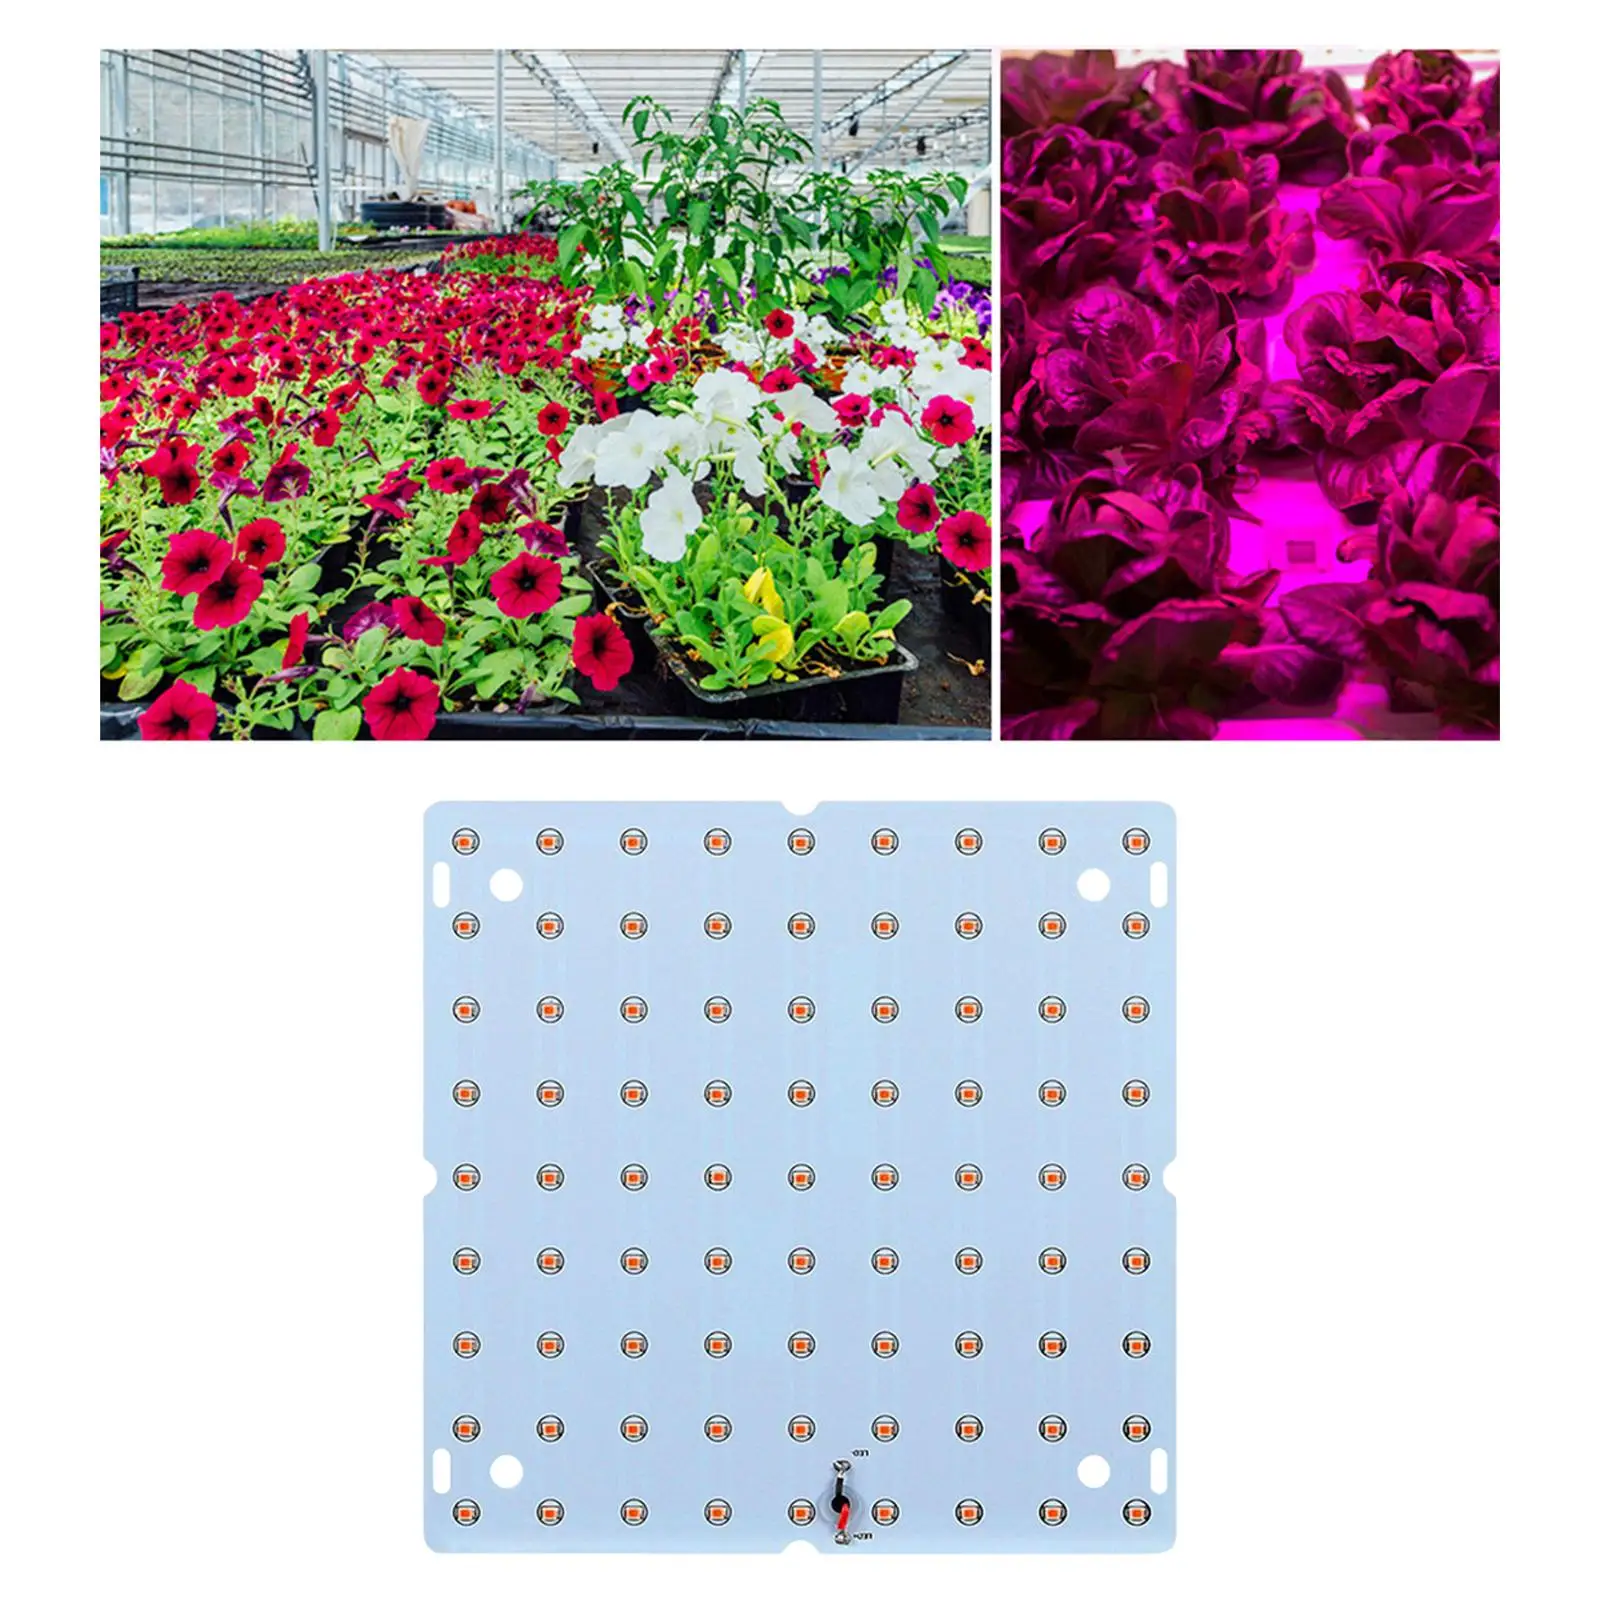 Aluminum led Grow Light Panel 1091LM Full Grow Light for Vegetable Bloom Hydroponics Seed Starting Flower Greenhouse